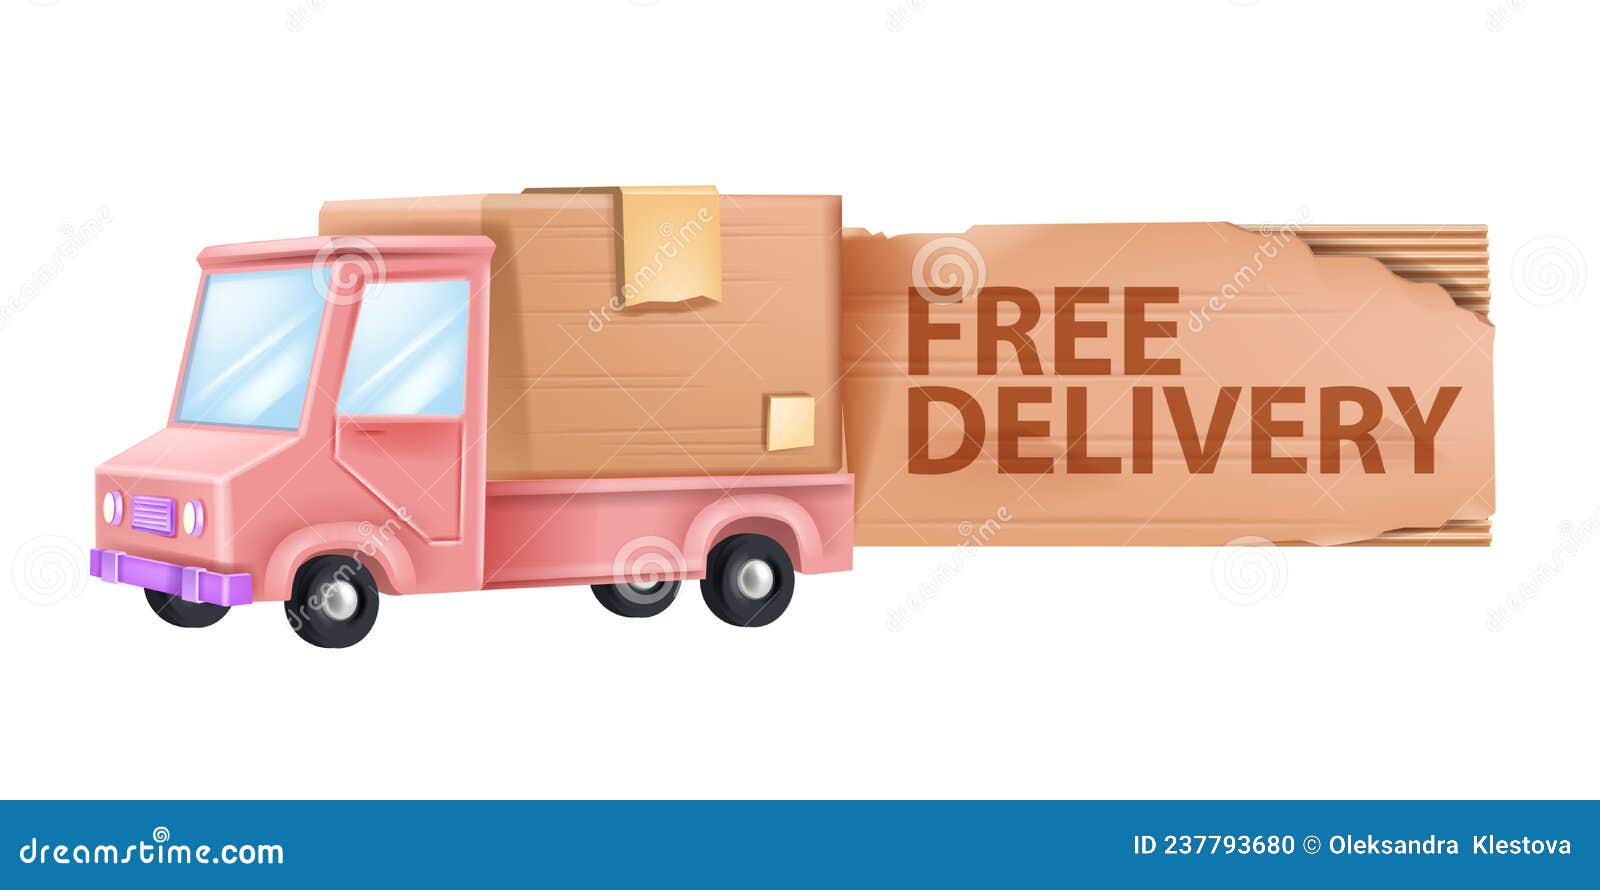 https://thumbs.dreamstime.com/z/d-delivery-car-illustration-free-fast-shipping-logo-vector-cargo-service-van-pink-truck-cardboard-box-cartoon-automobile-d-237793680.jpg